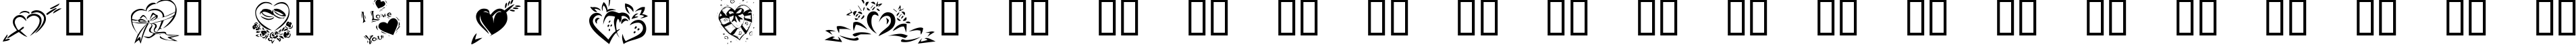 Пример написания английского алфавита шрифтом KR Valentines 2006 Four